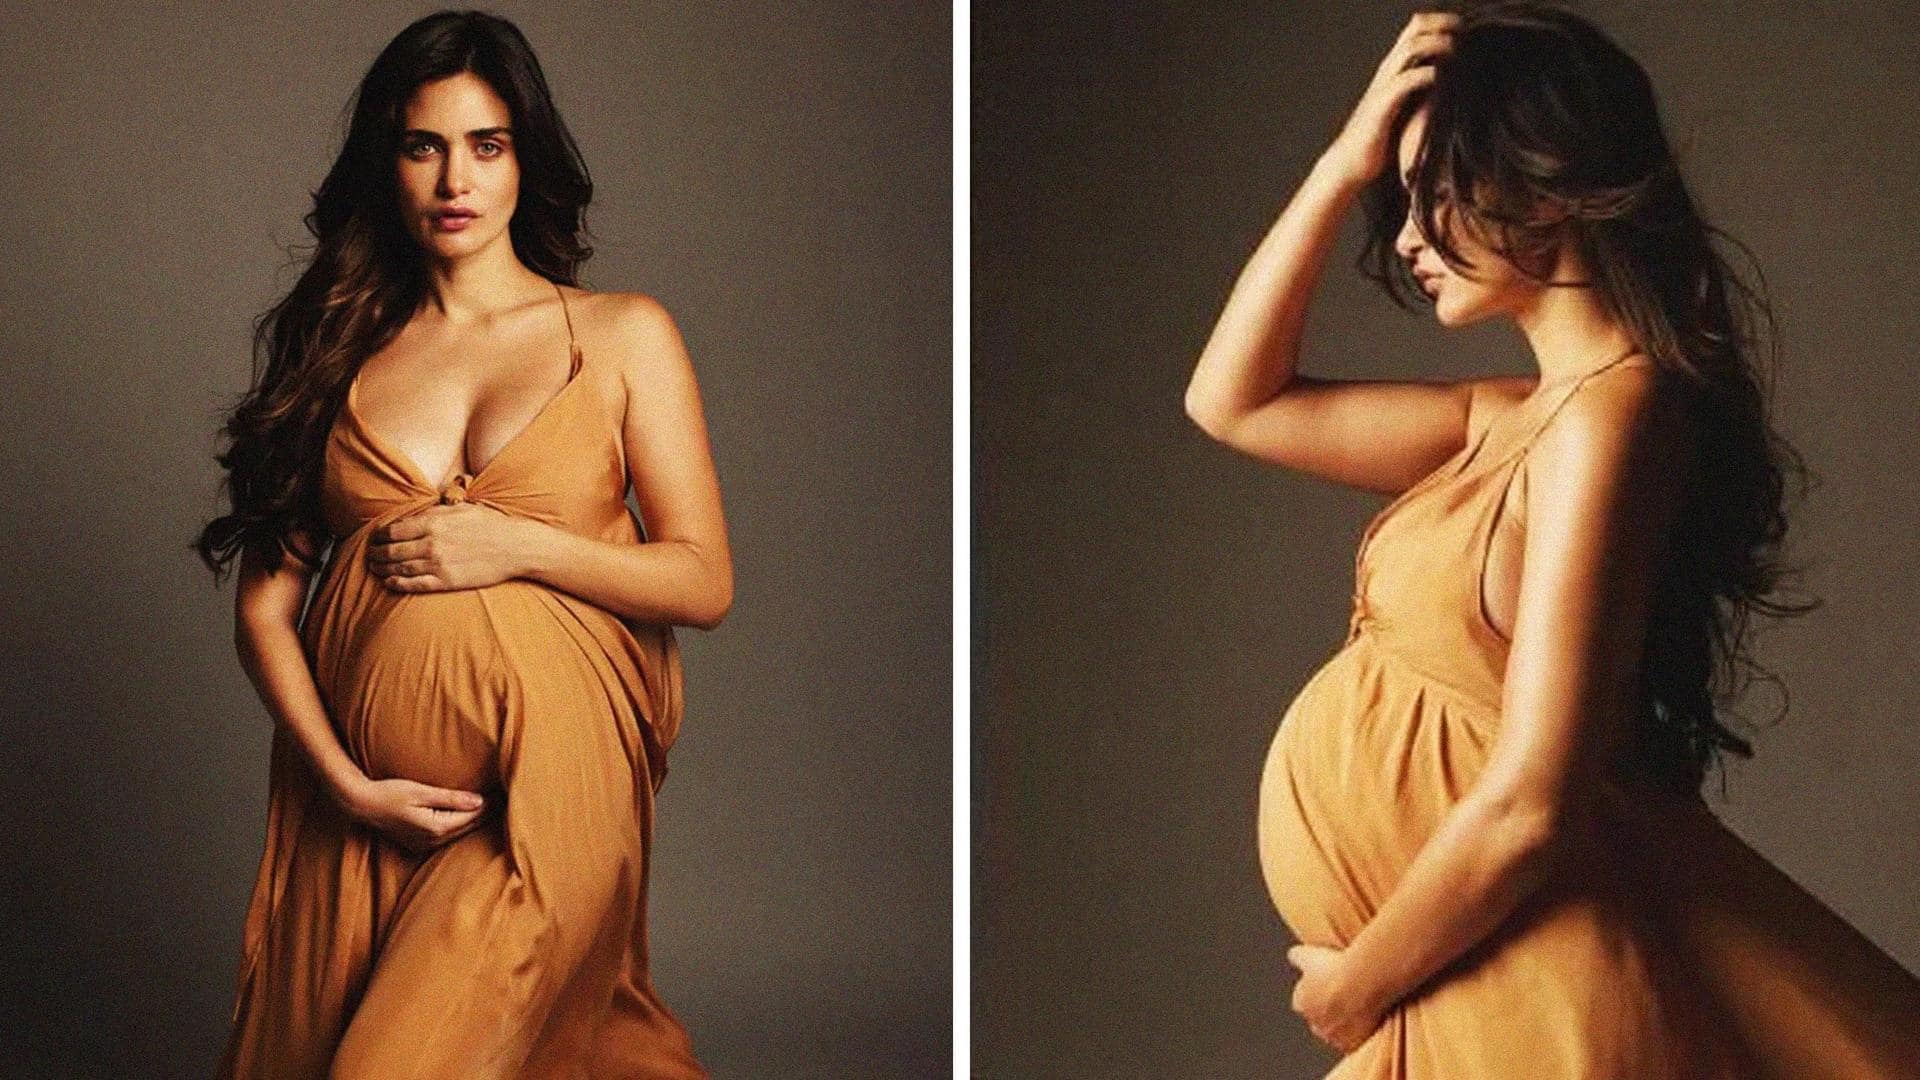 Arjun Rampal's girlfriend and model Gabriella Demetriades announces 2nd pregnancy